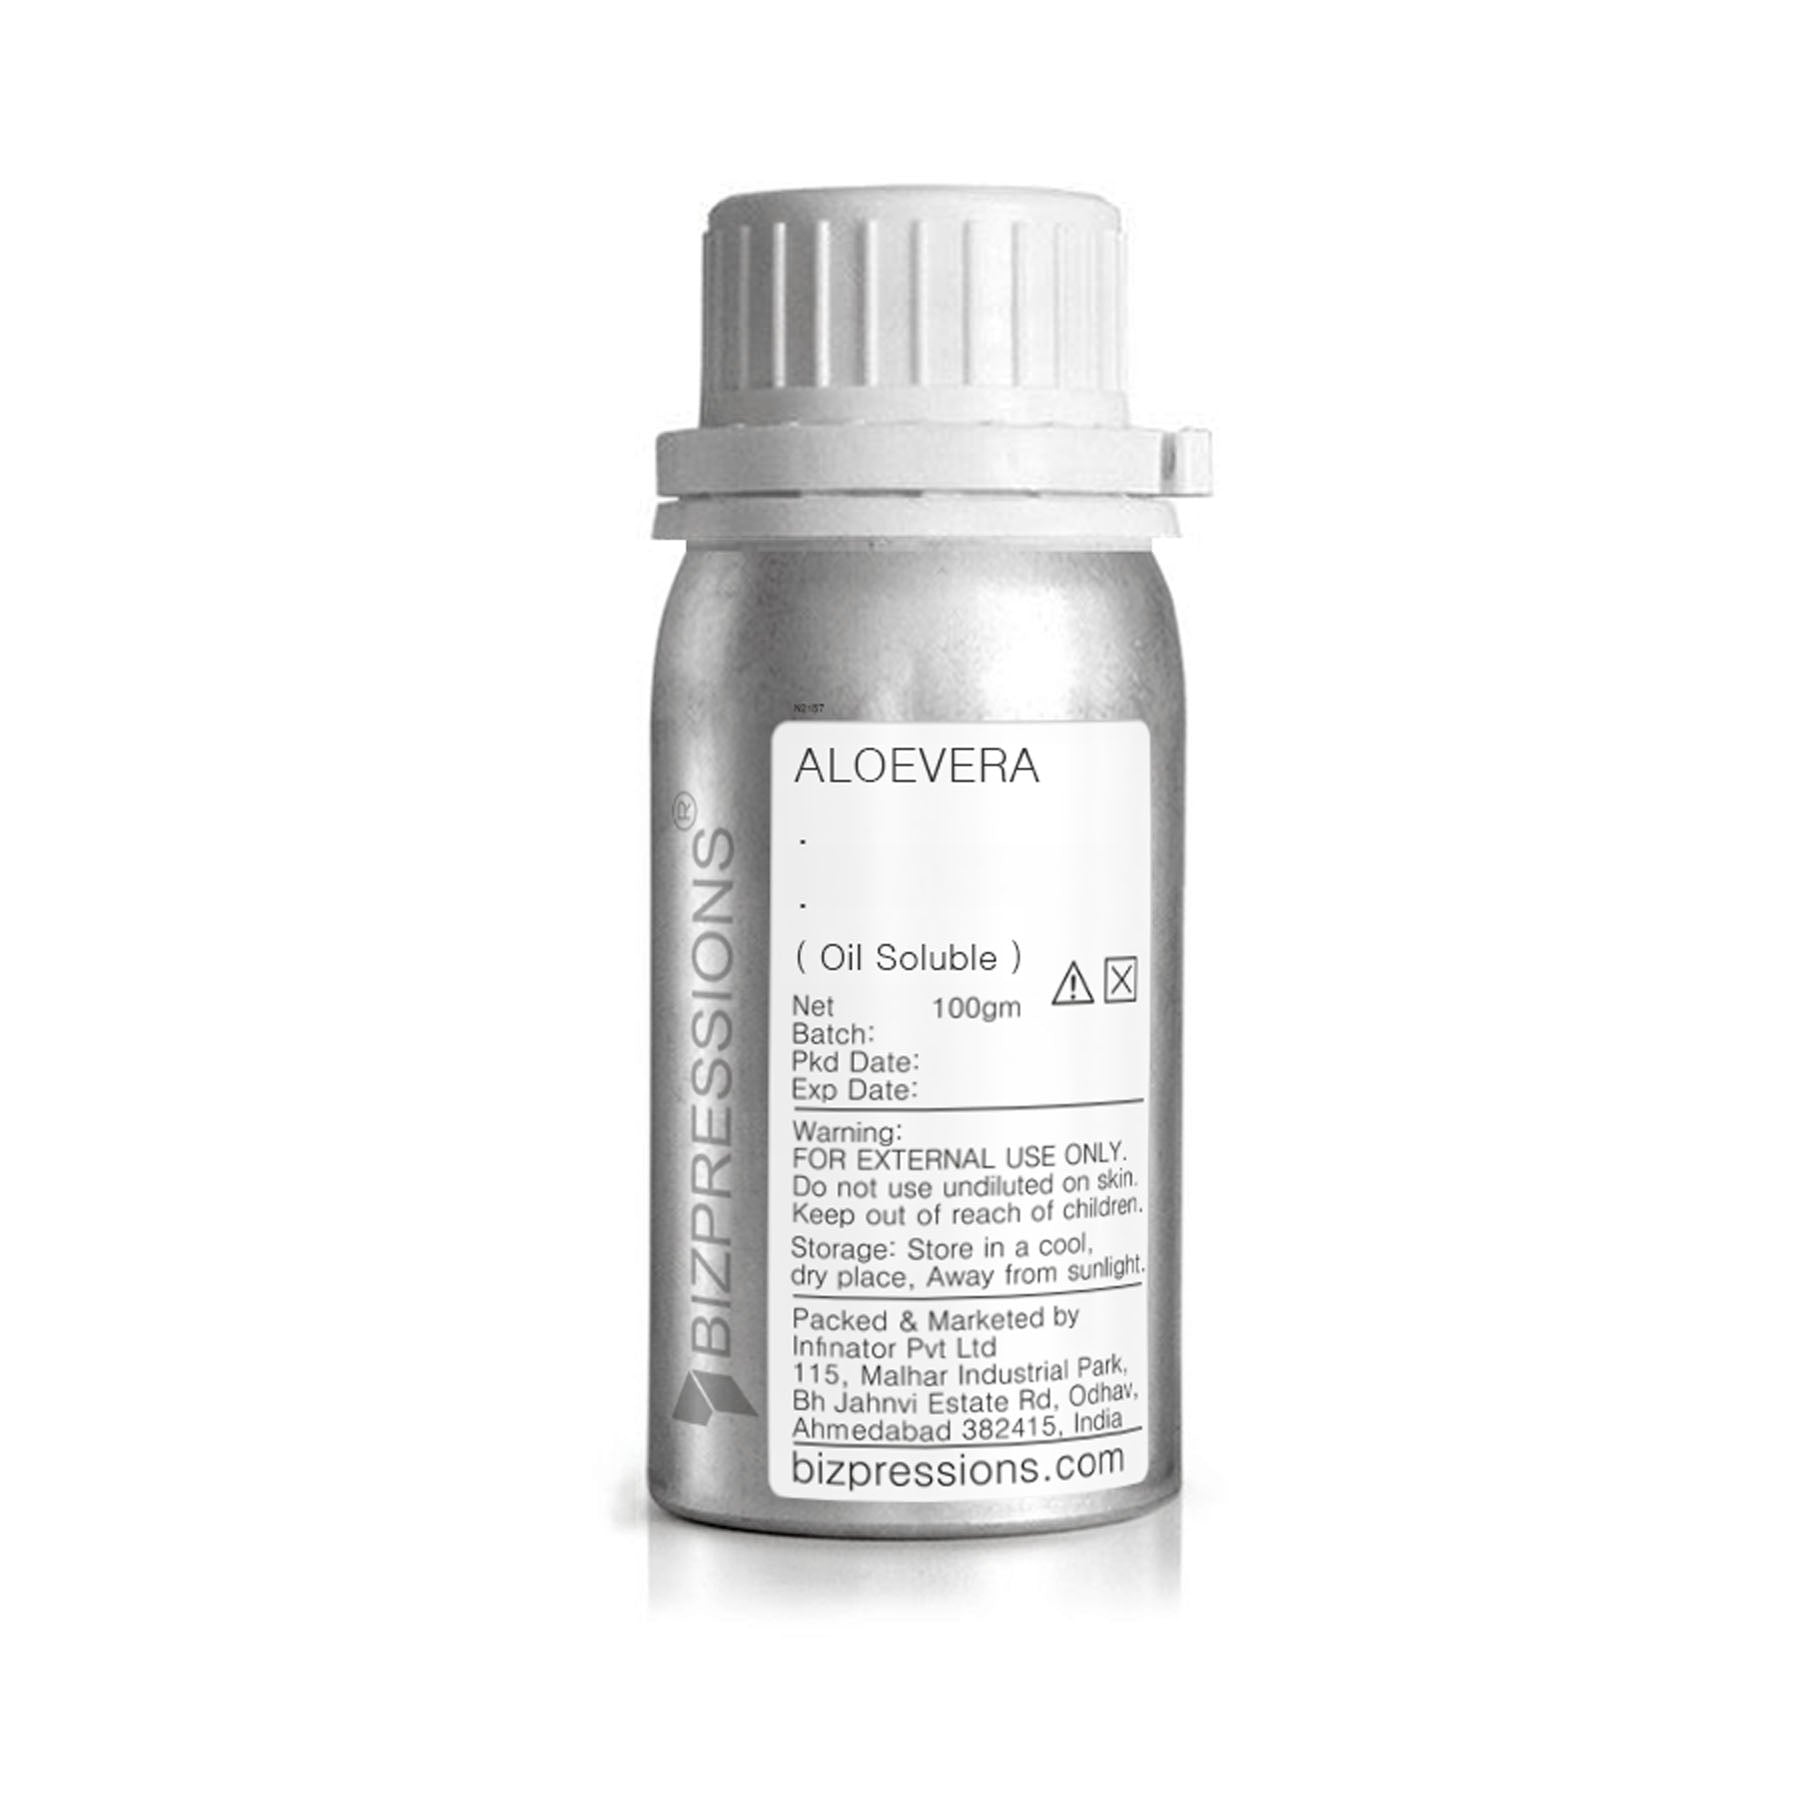 ALOEVERA - Fragrance ( Oil Soluble ) - 100 gm